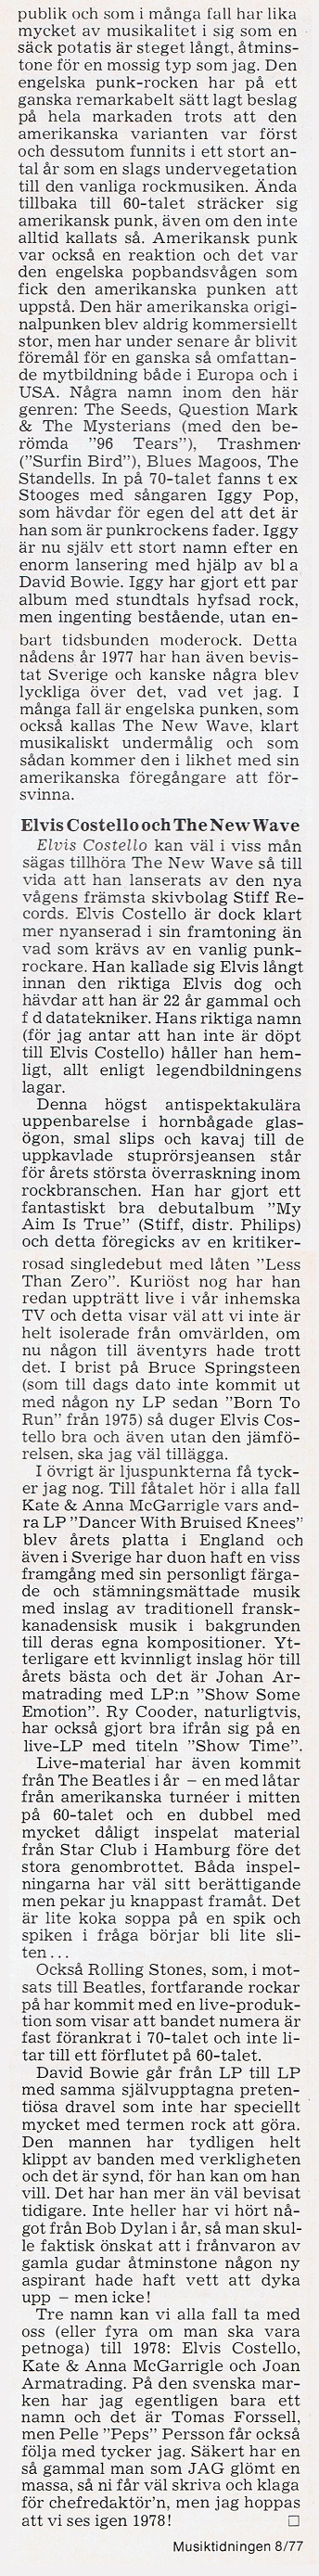 1977-08-00 Musiktidningen page 22 composite.jpg